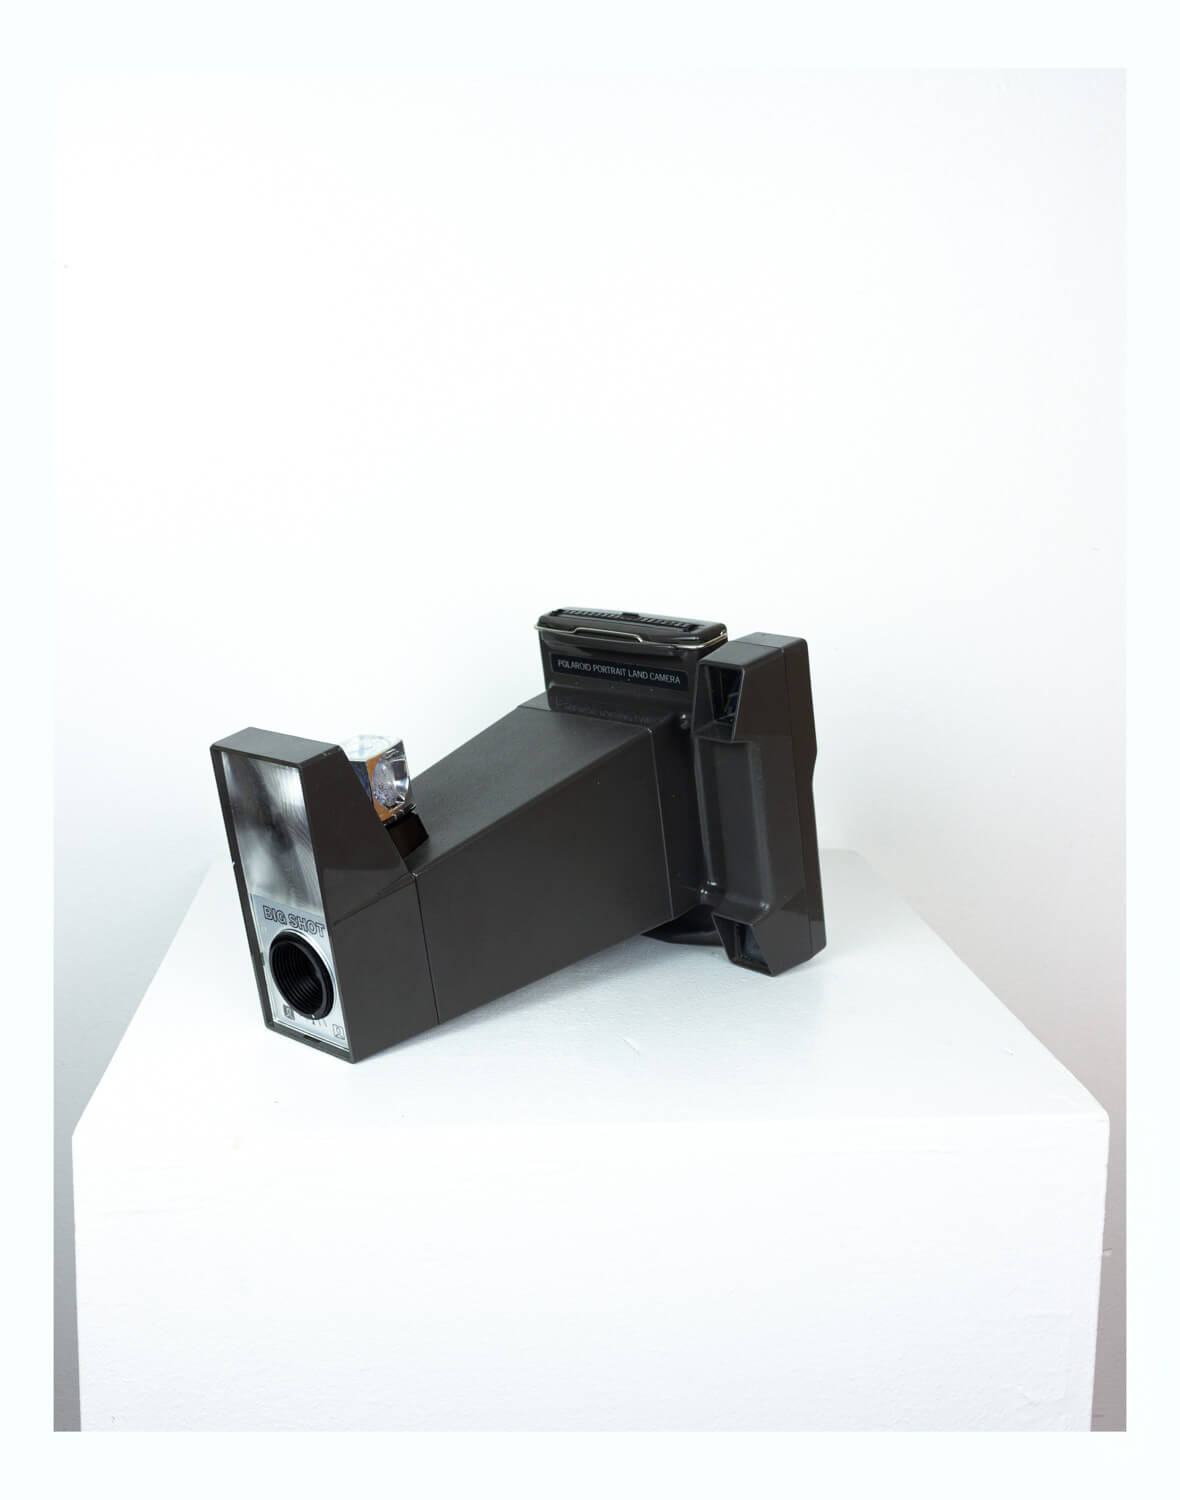 How-to: Shoot Fujifilm Instax on a Polaroid BigShot